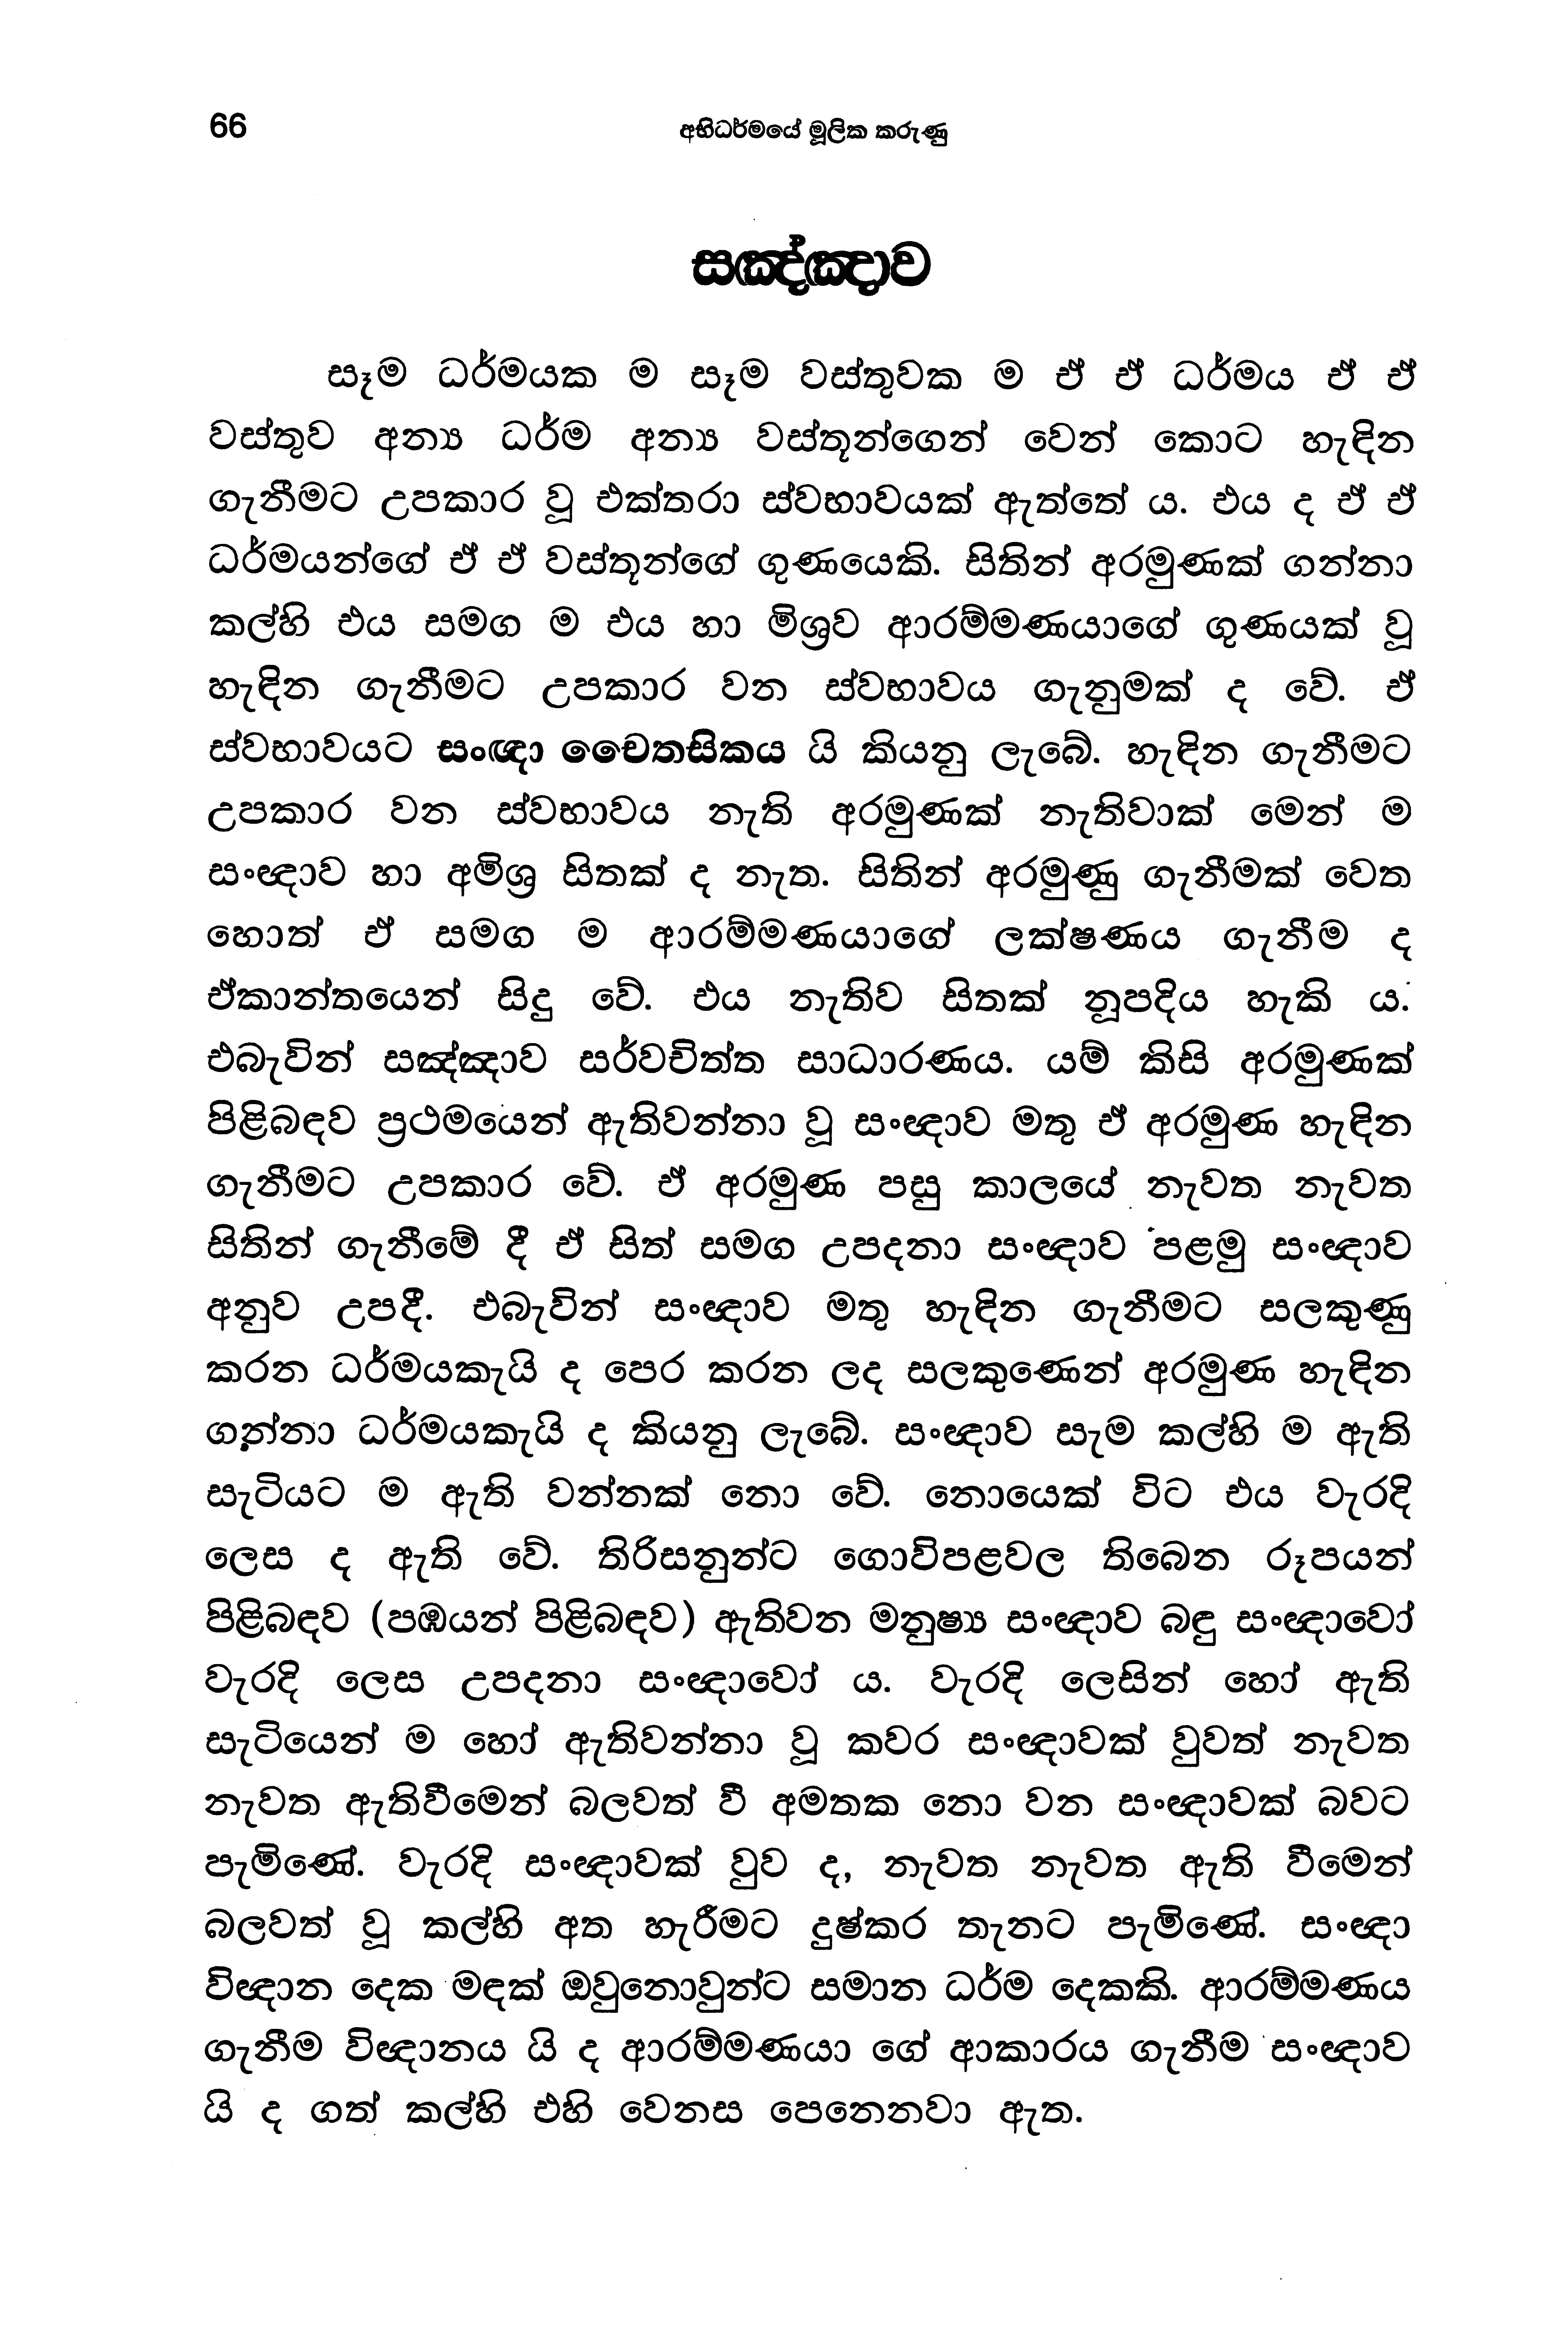 abhidharmaye-mulika-karunu-rerukane-chandavimala-nahimi-full-book-with-comments-highlights-and-book-marks_page_064